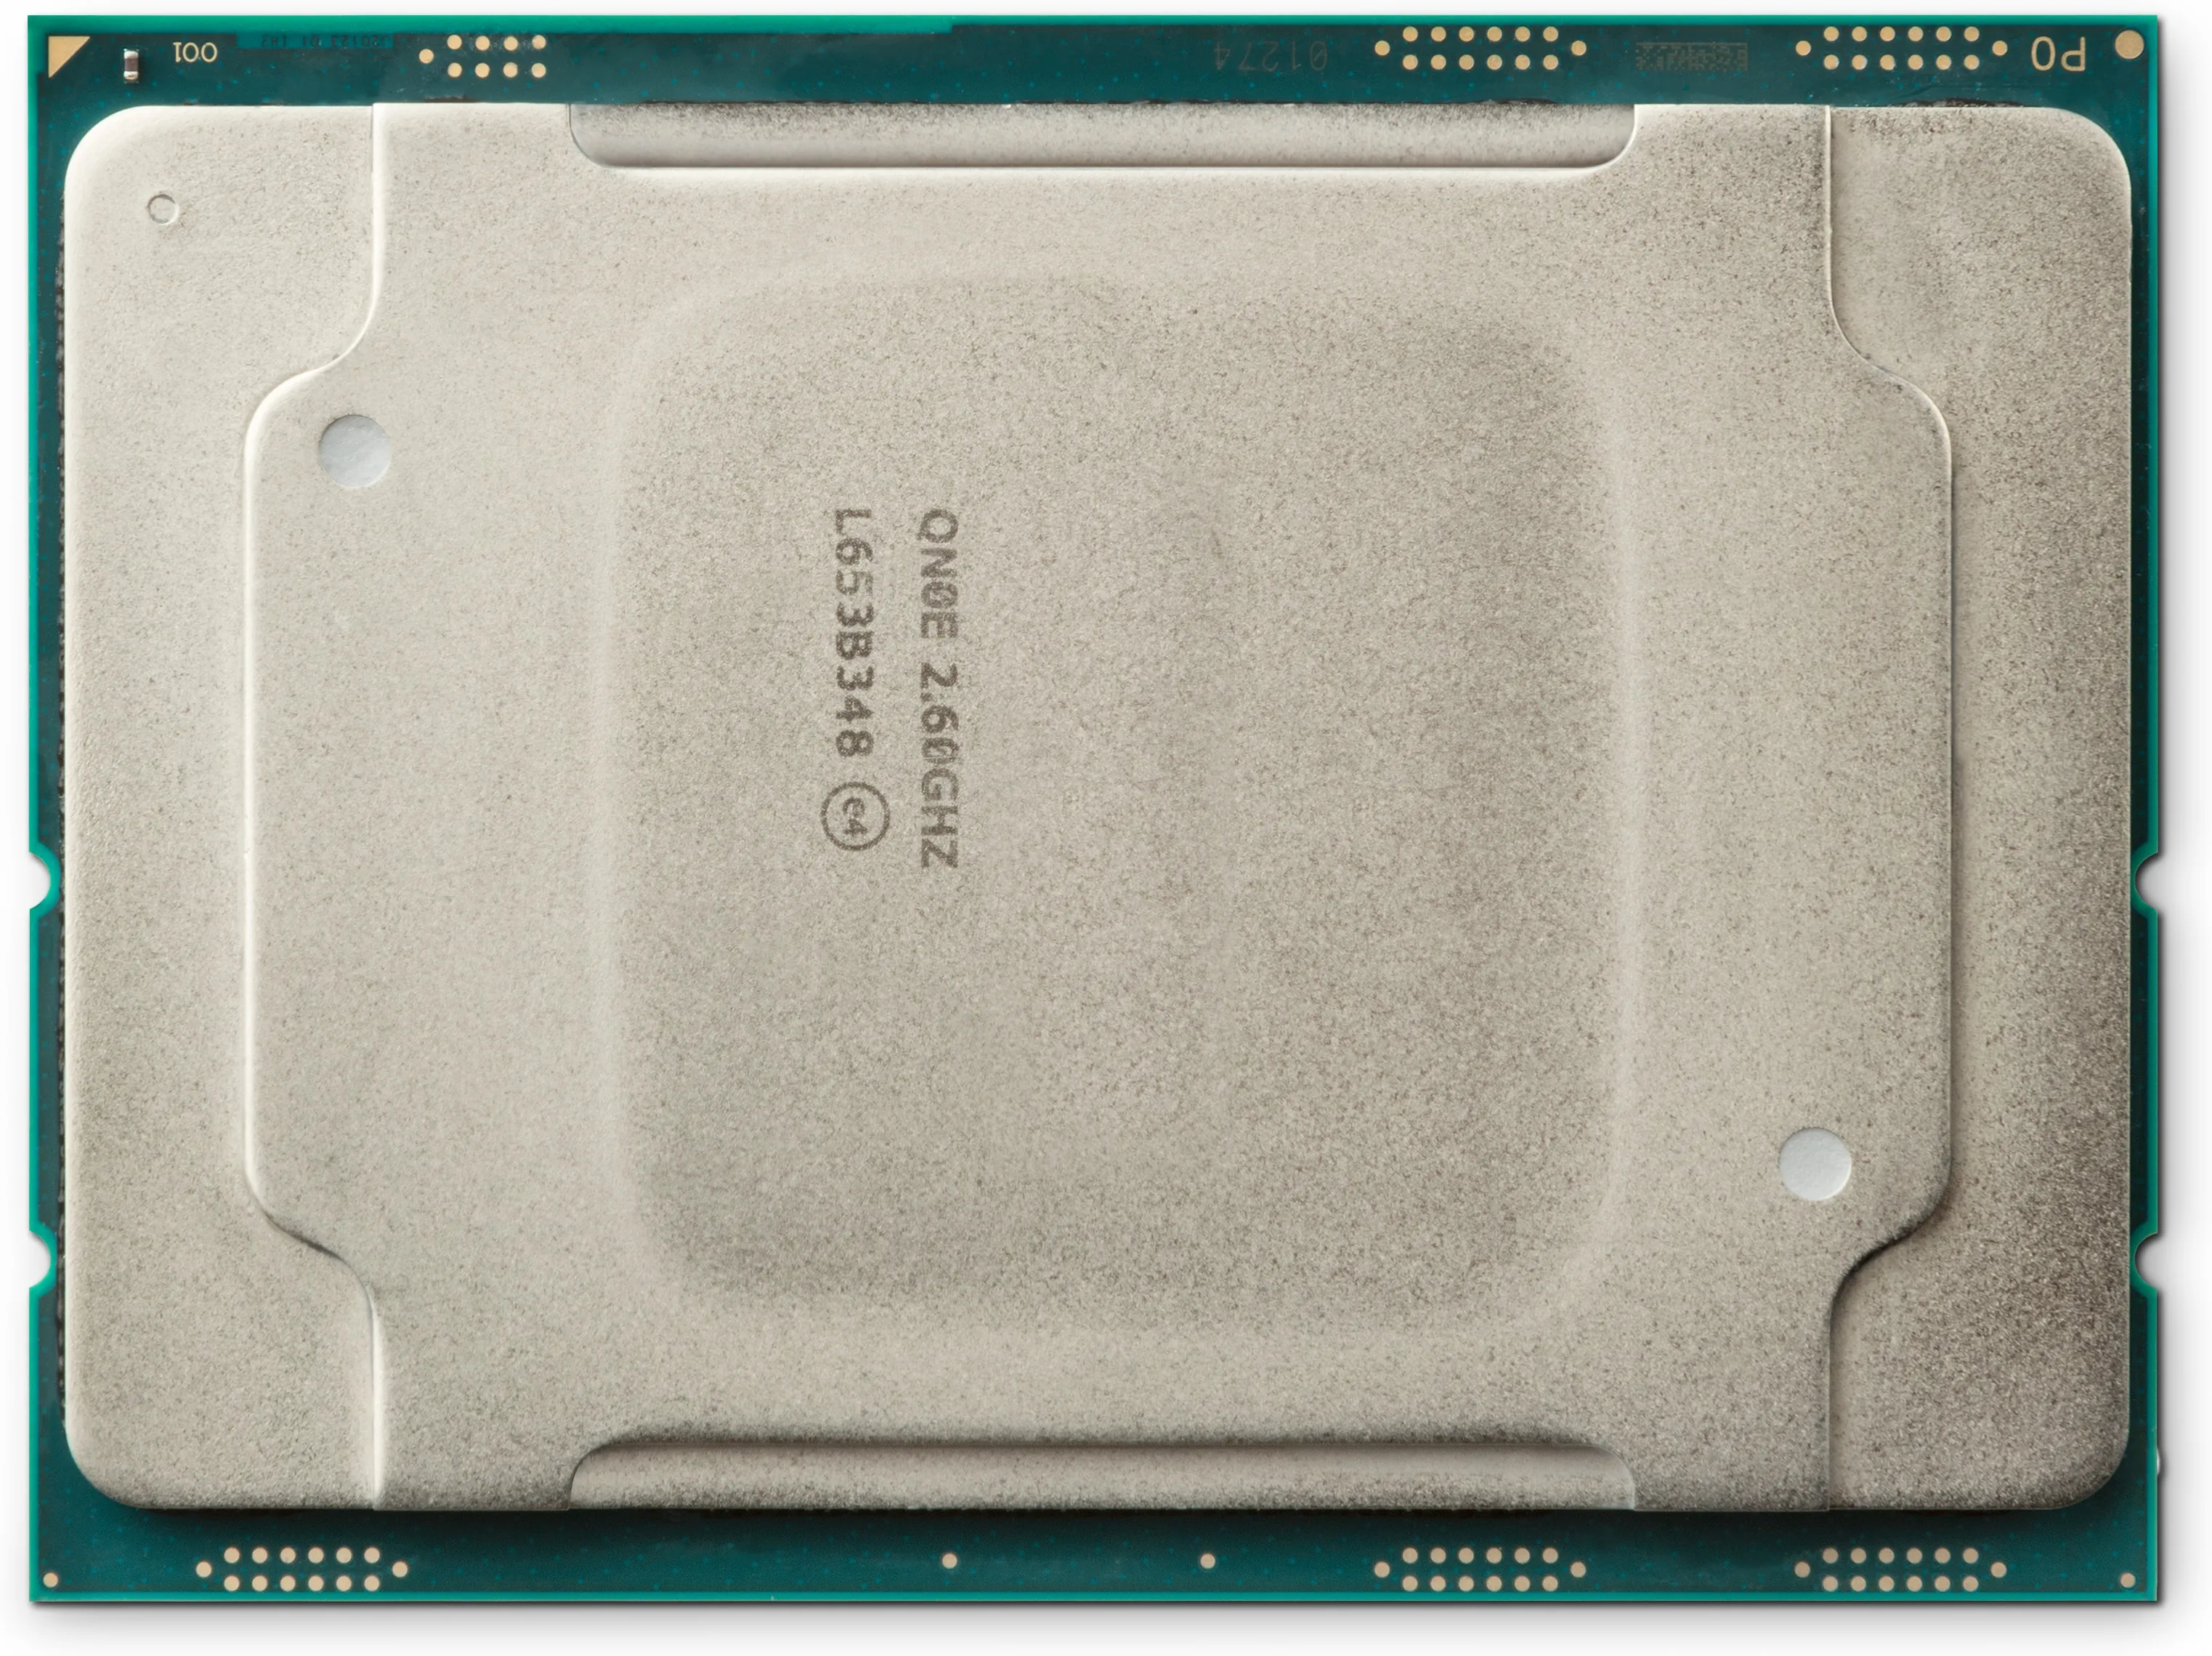 Vente HP Z6G4 Xeon 6226 2.8 2933 12C 125W HP au meilleur prix - visuel 6